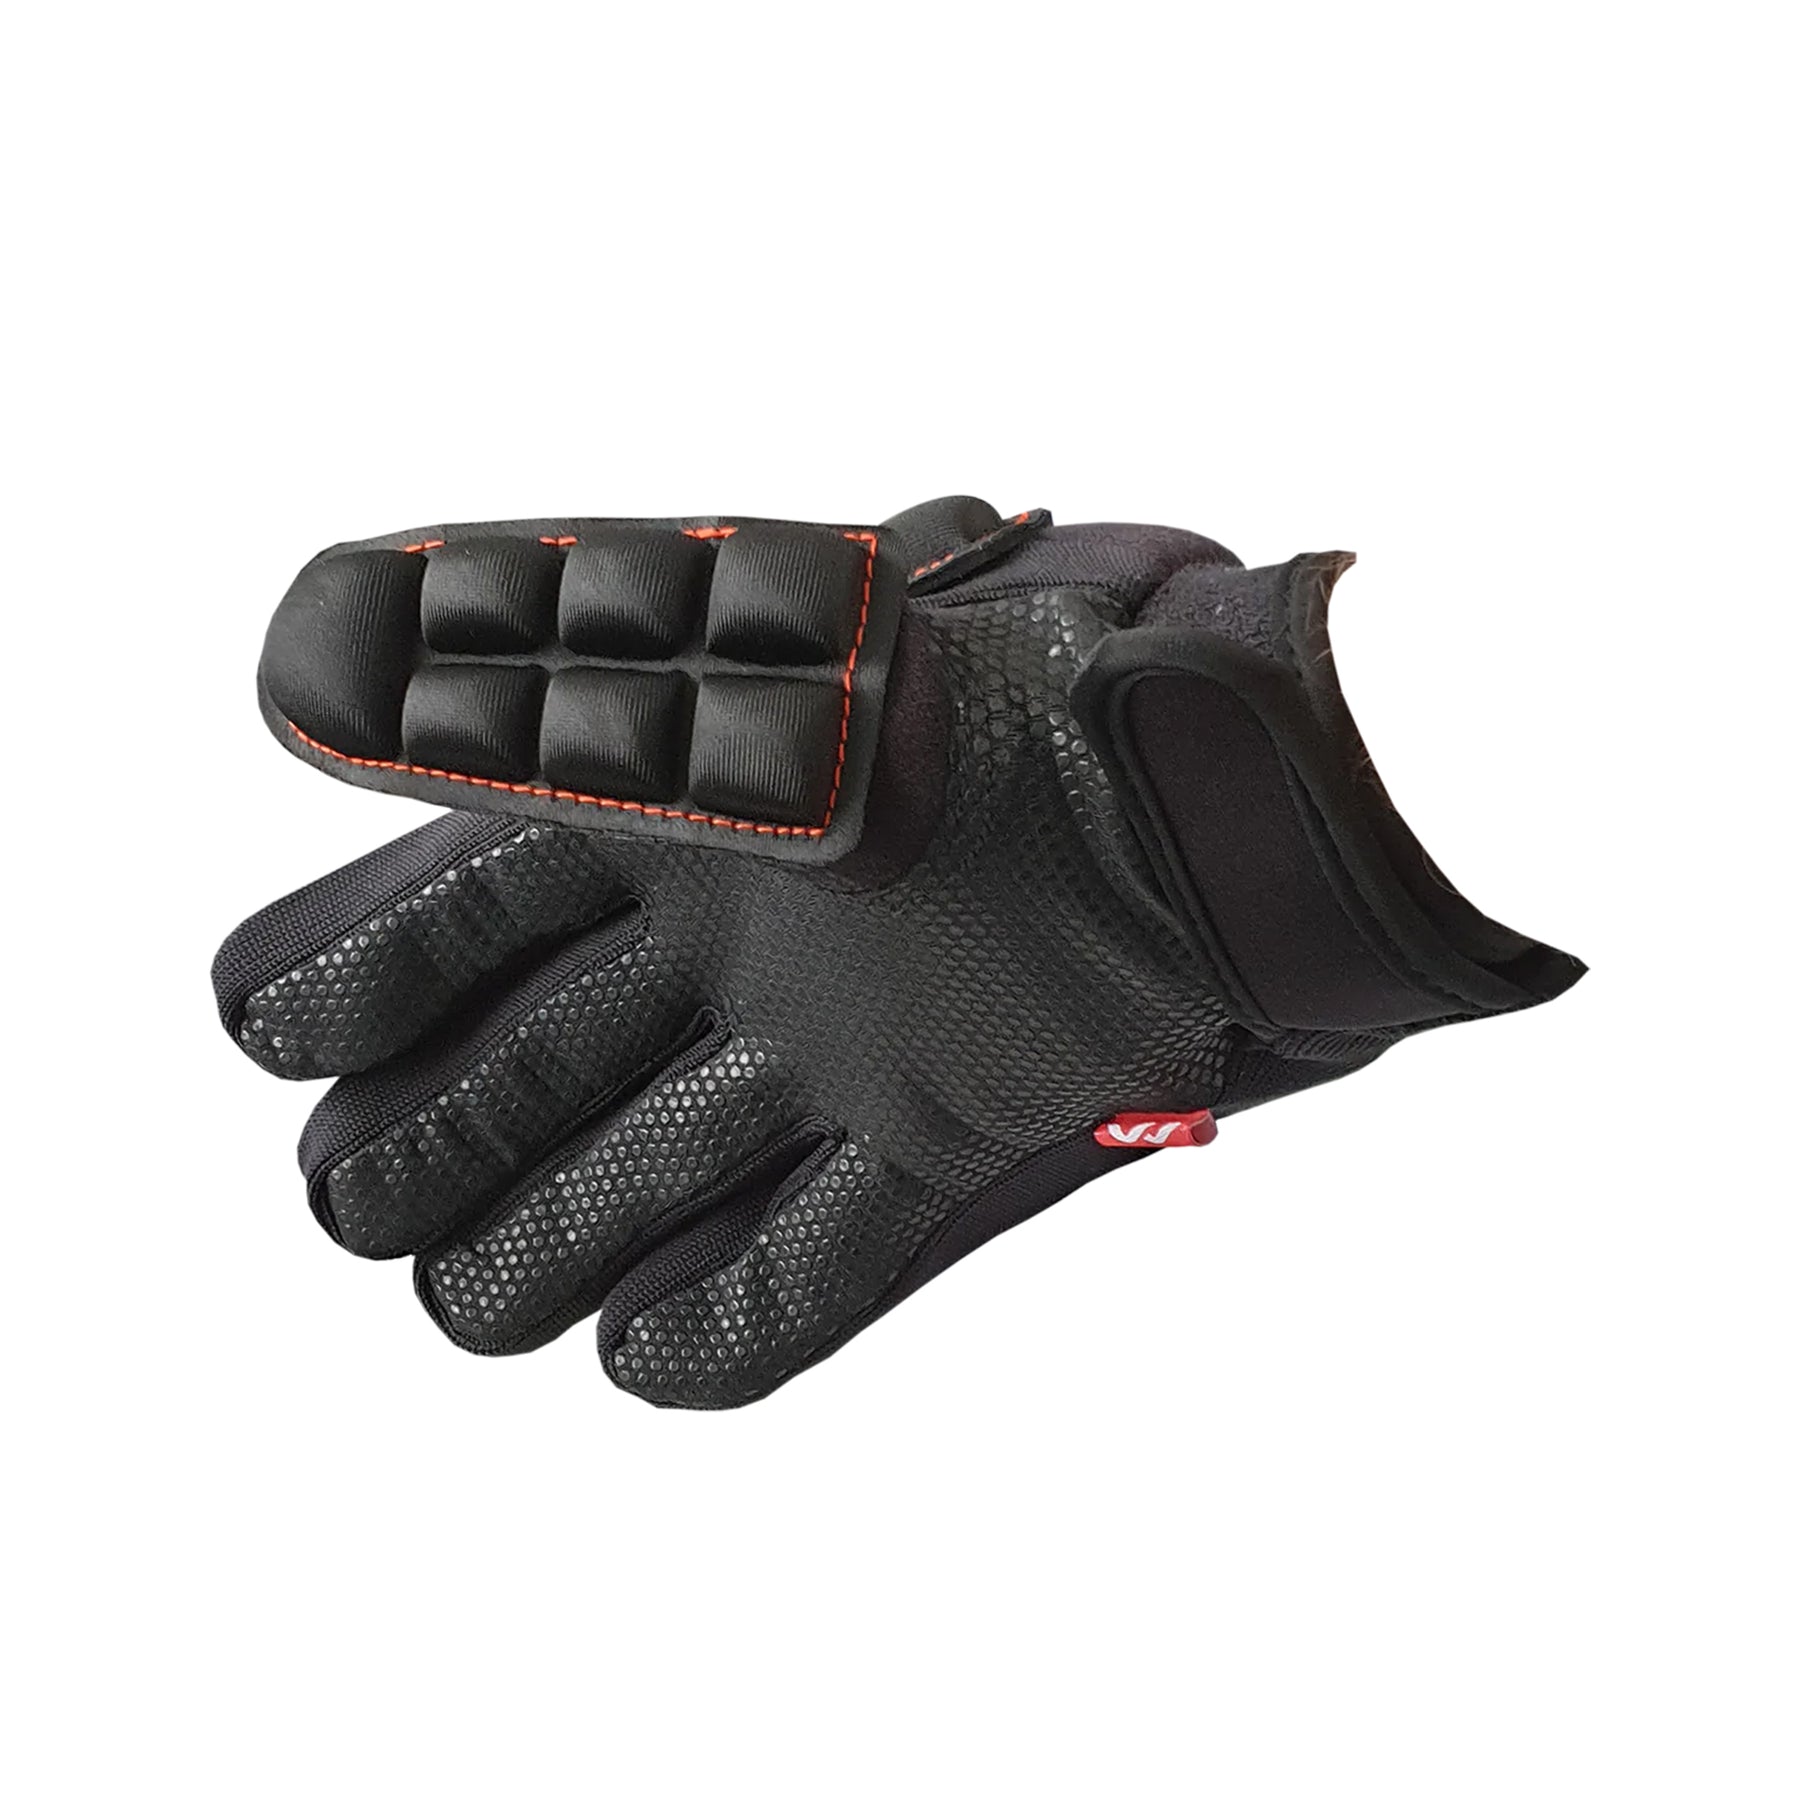 Mercian Evo 0.3 Hockey Glove - Right Hand: Black/Orange